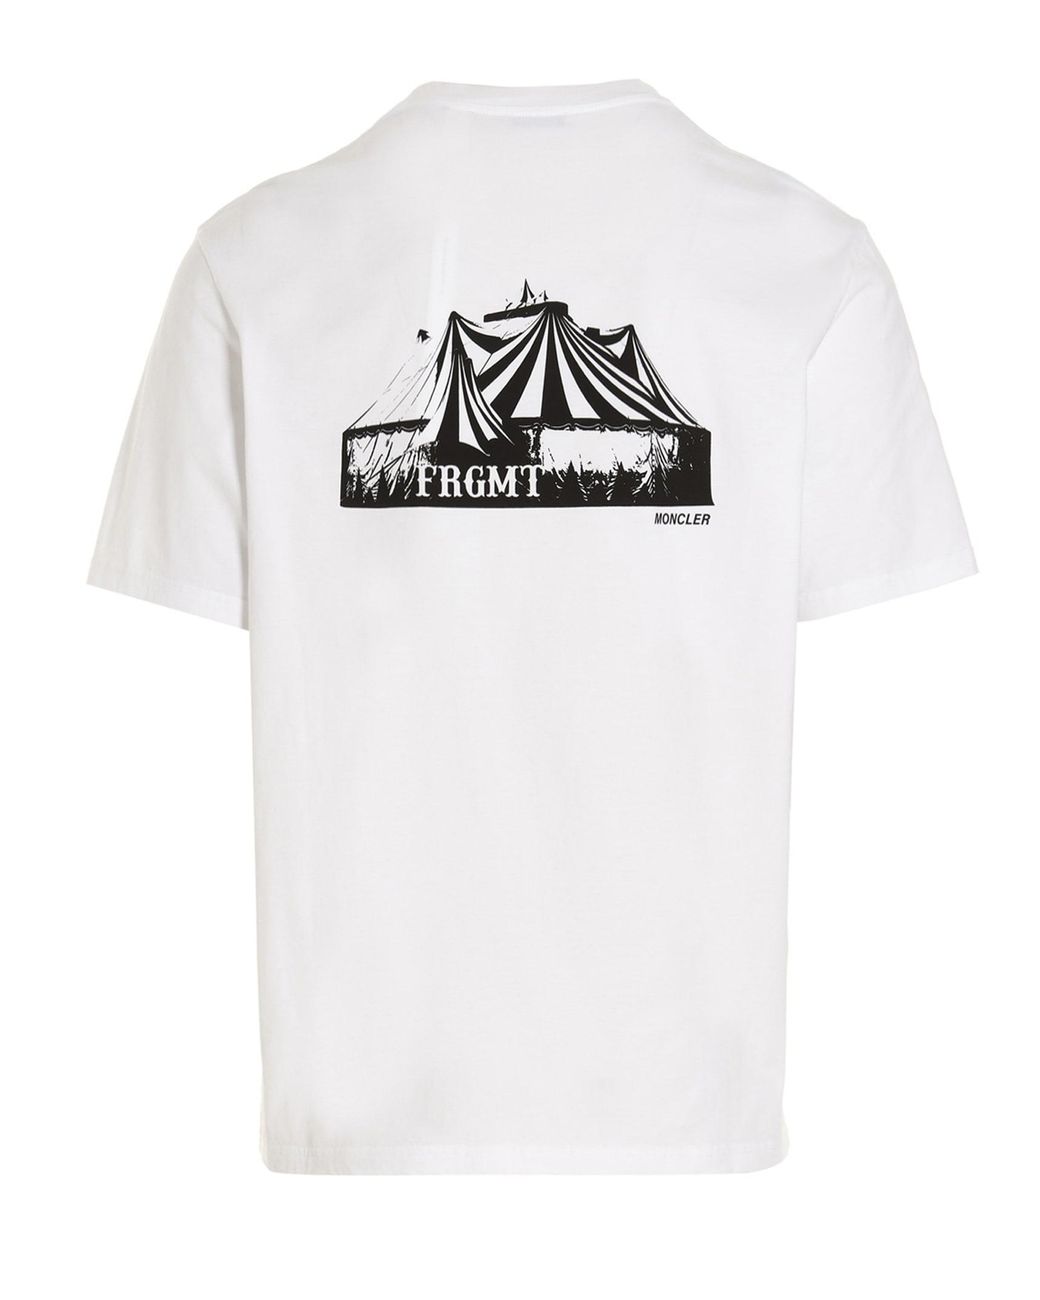 Moncler Genius T-shirt X Fragment in White | Lyst